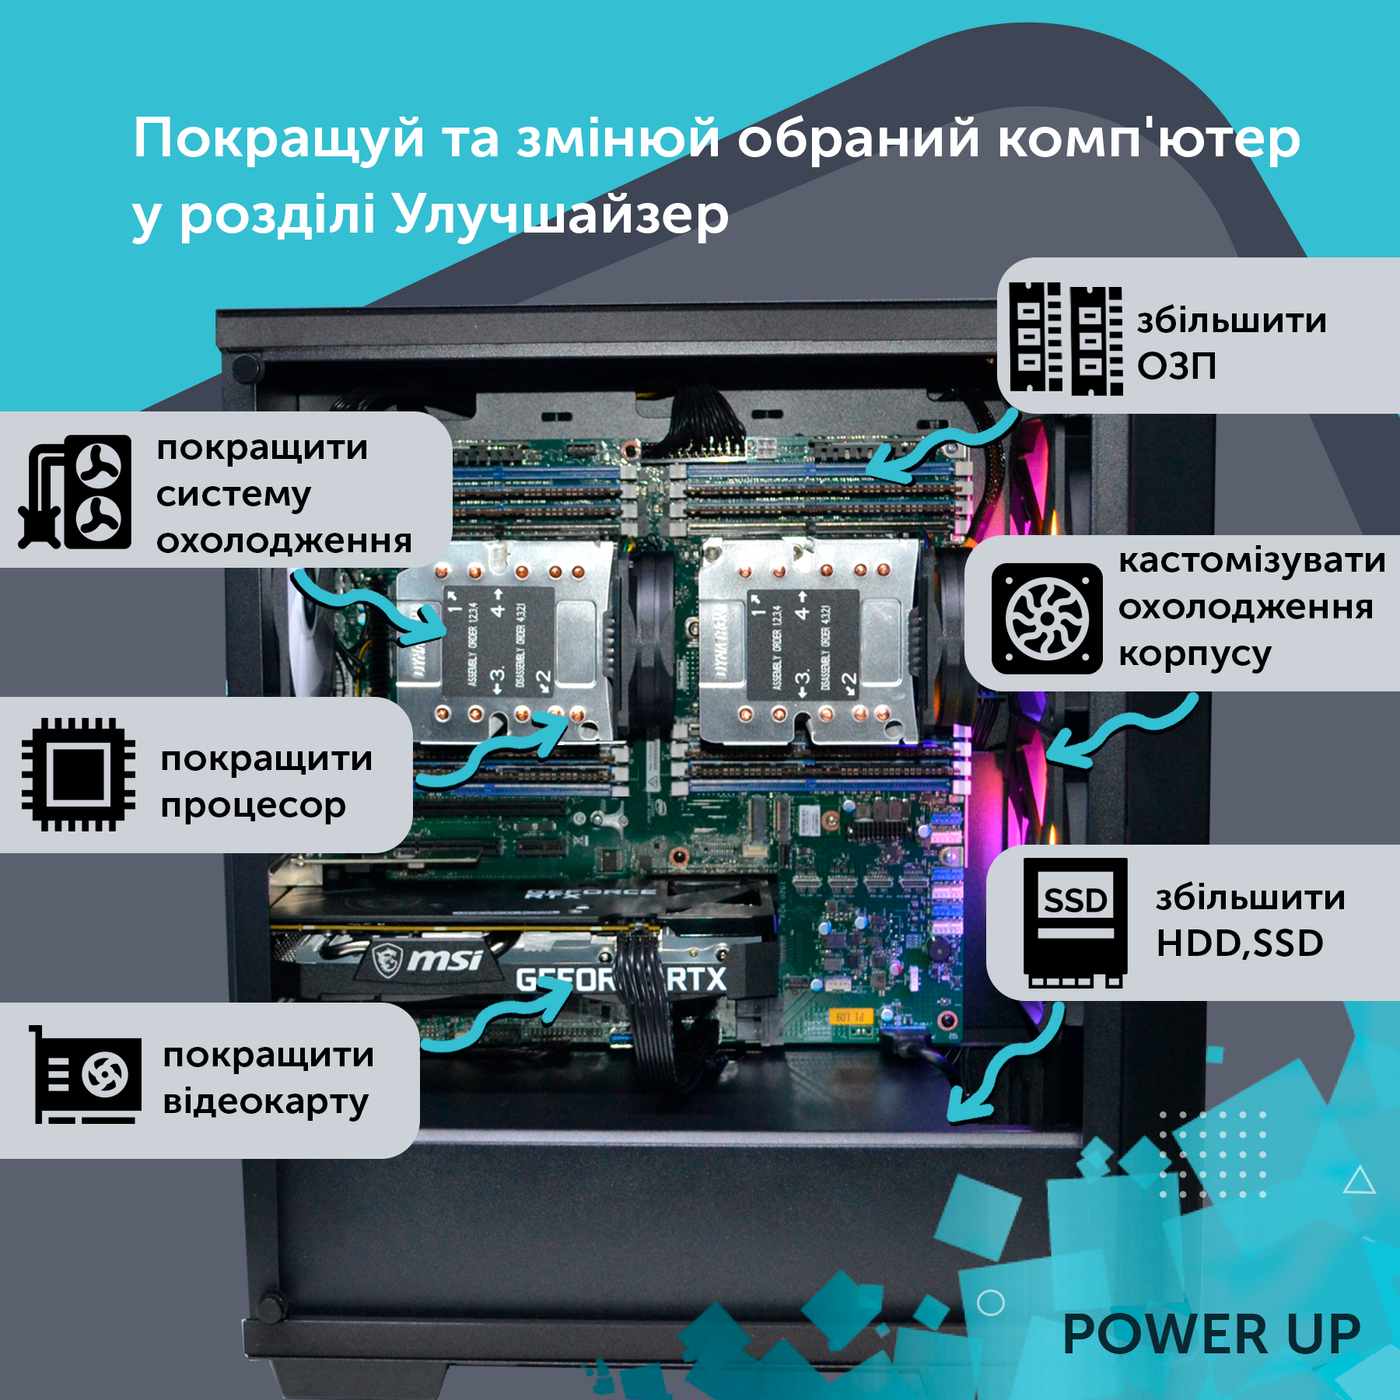 Рабочая станция PowerUp Desktop #362 Ryzen 9 7900x/64 GB/SSD 2TB/GeForce RTX 4070 Super 12GB